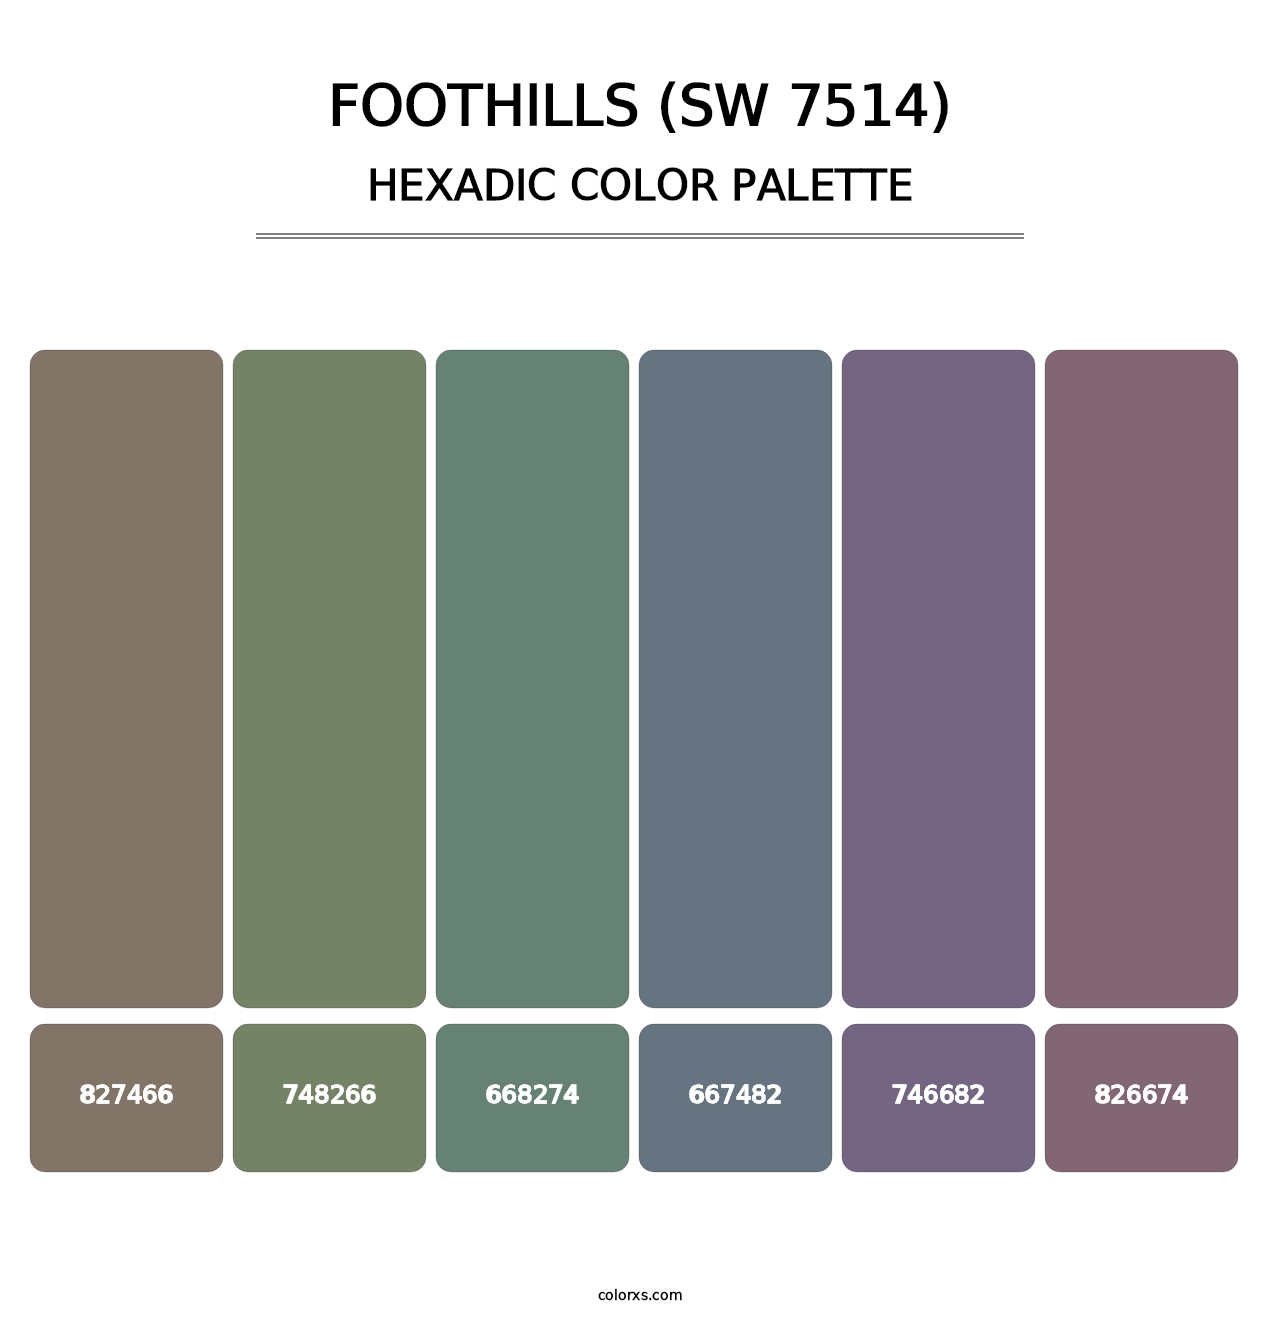 Foothills (SW 7514) - Hexadic Color Palette